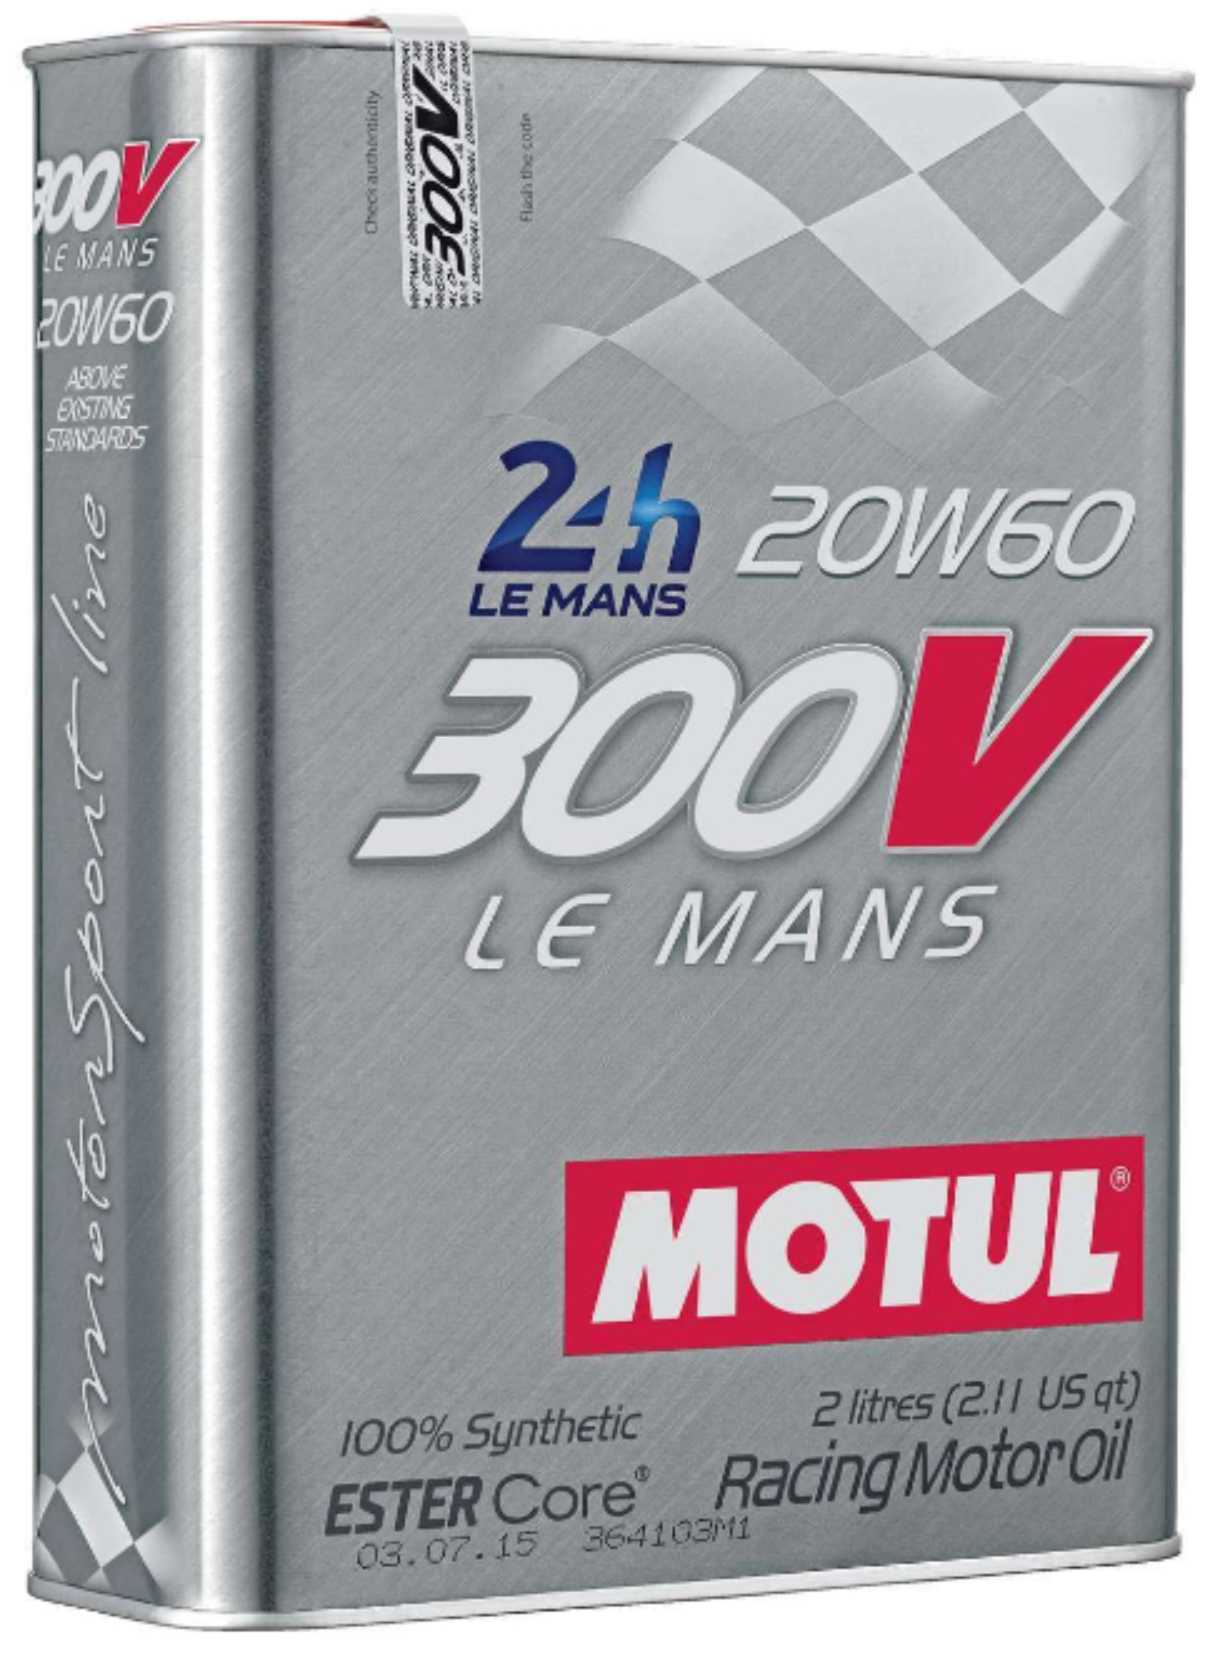 Motul 300V Le Mans 20W60 Synthetic Racing Oil - 2L